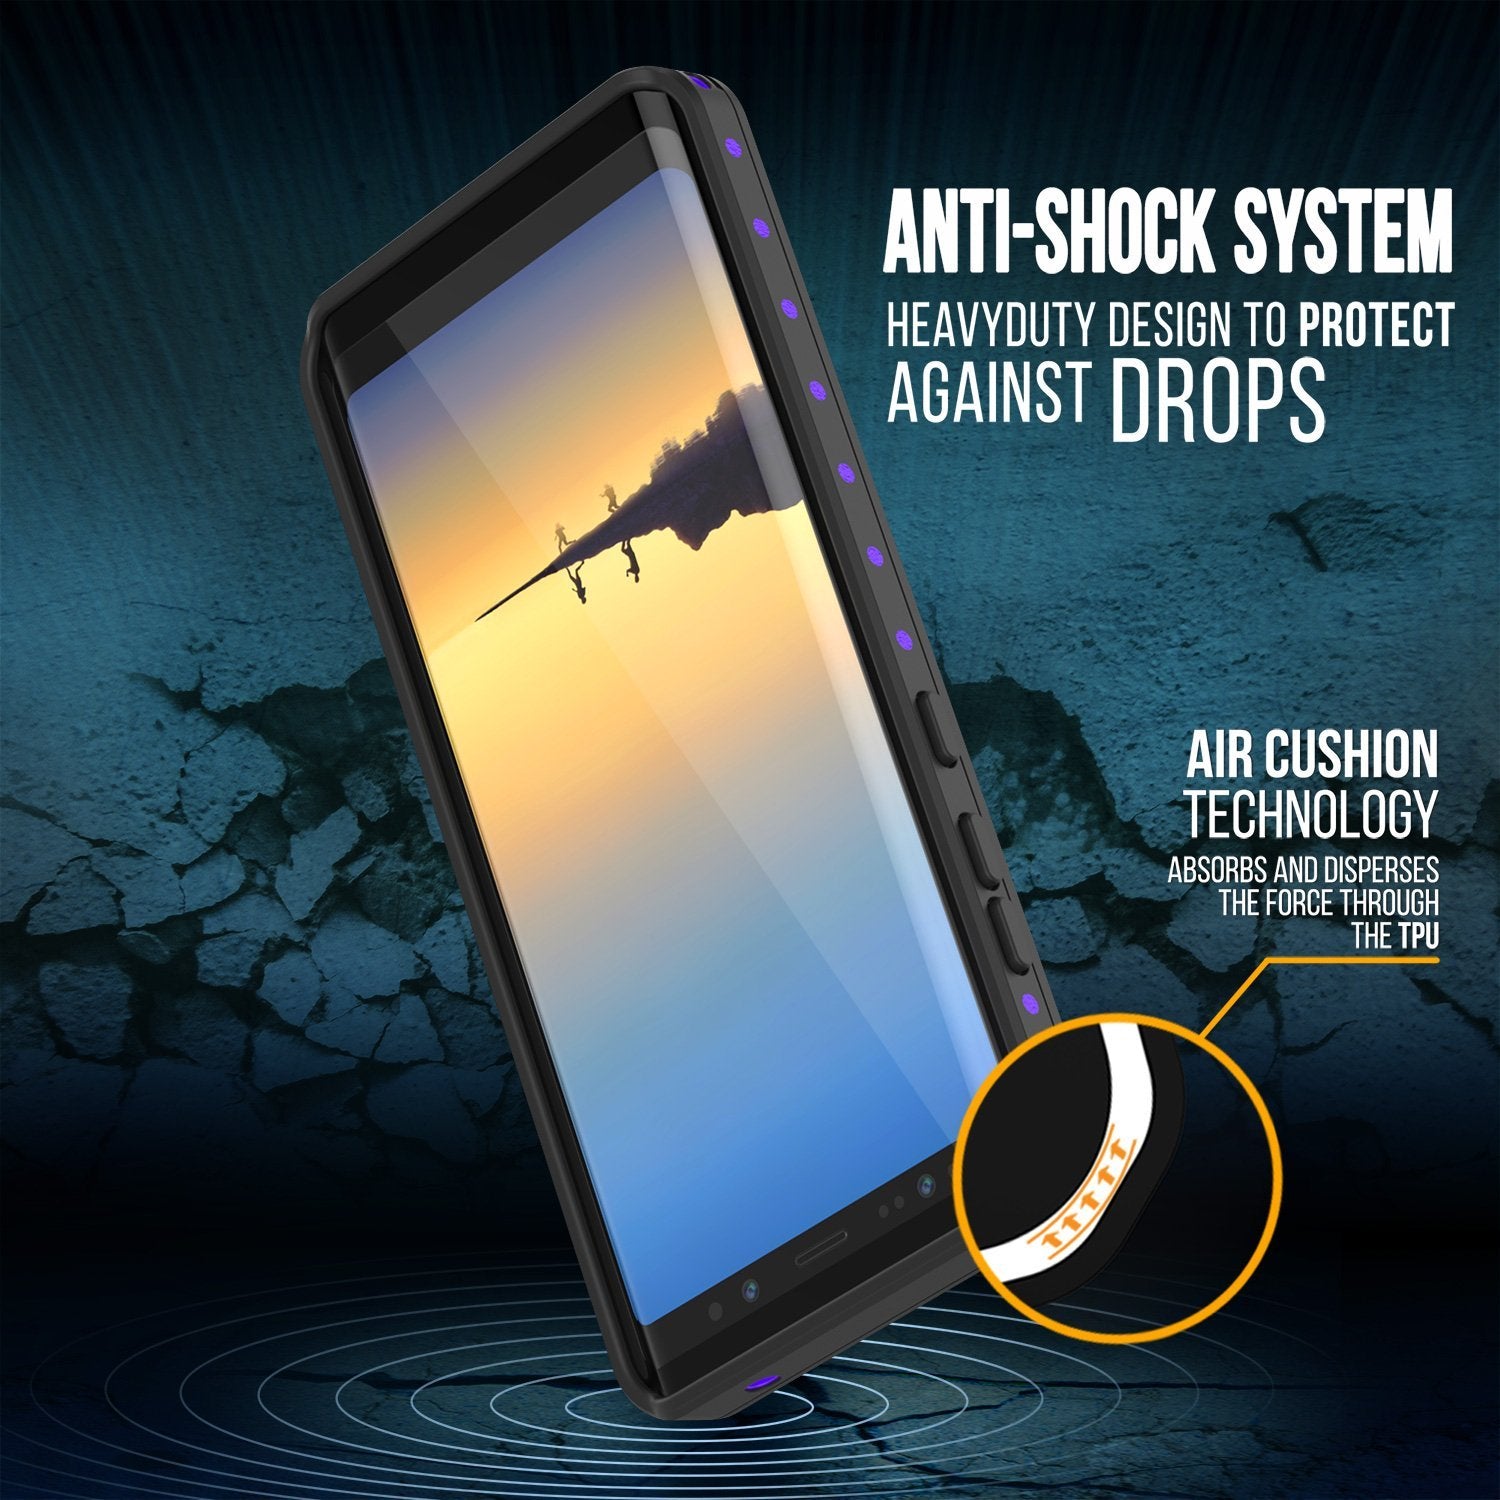 Galaxy Note 8 Waterproof case, StudStar Series Armor Cover [PURPLE]